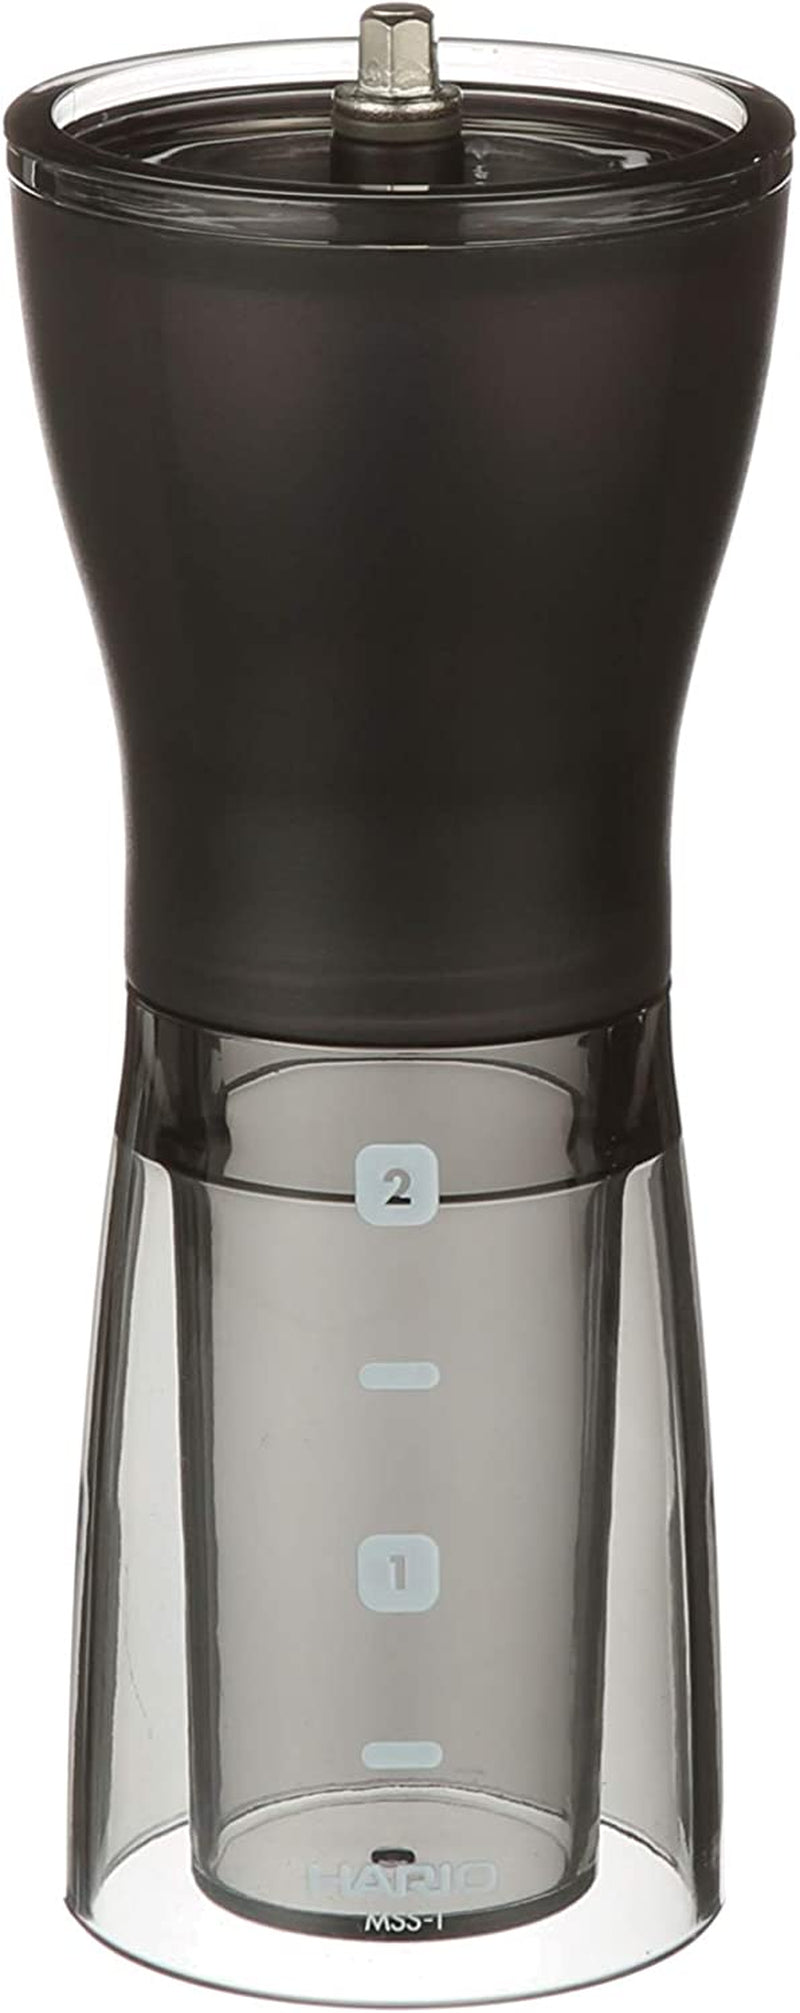 Hario Ceramic Coffee Mill - 'Mini-Slim Plus' Manual Coffee Grinder 24g Coffee Capacity